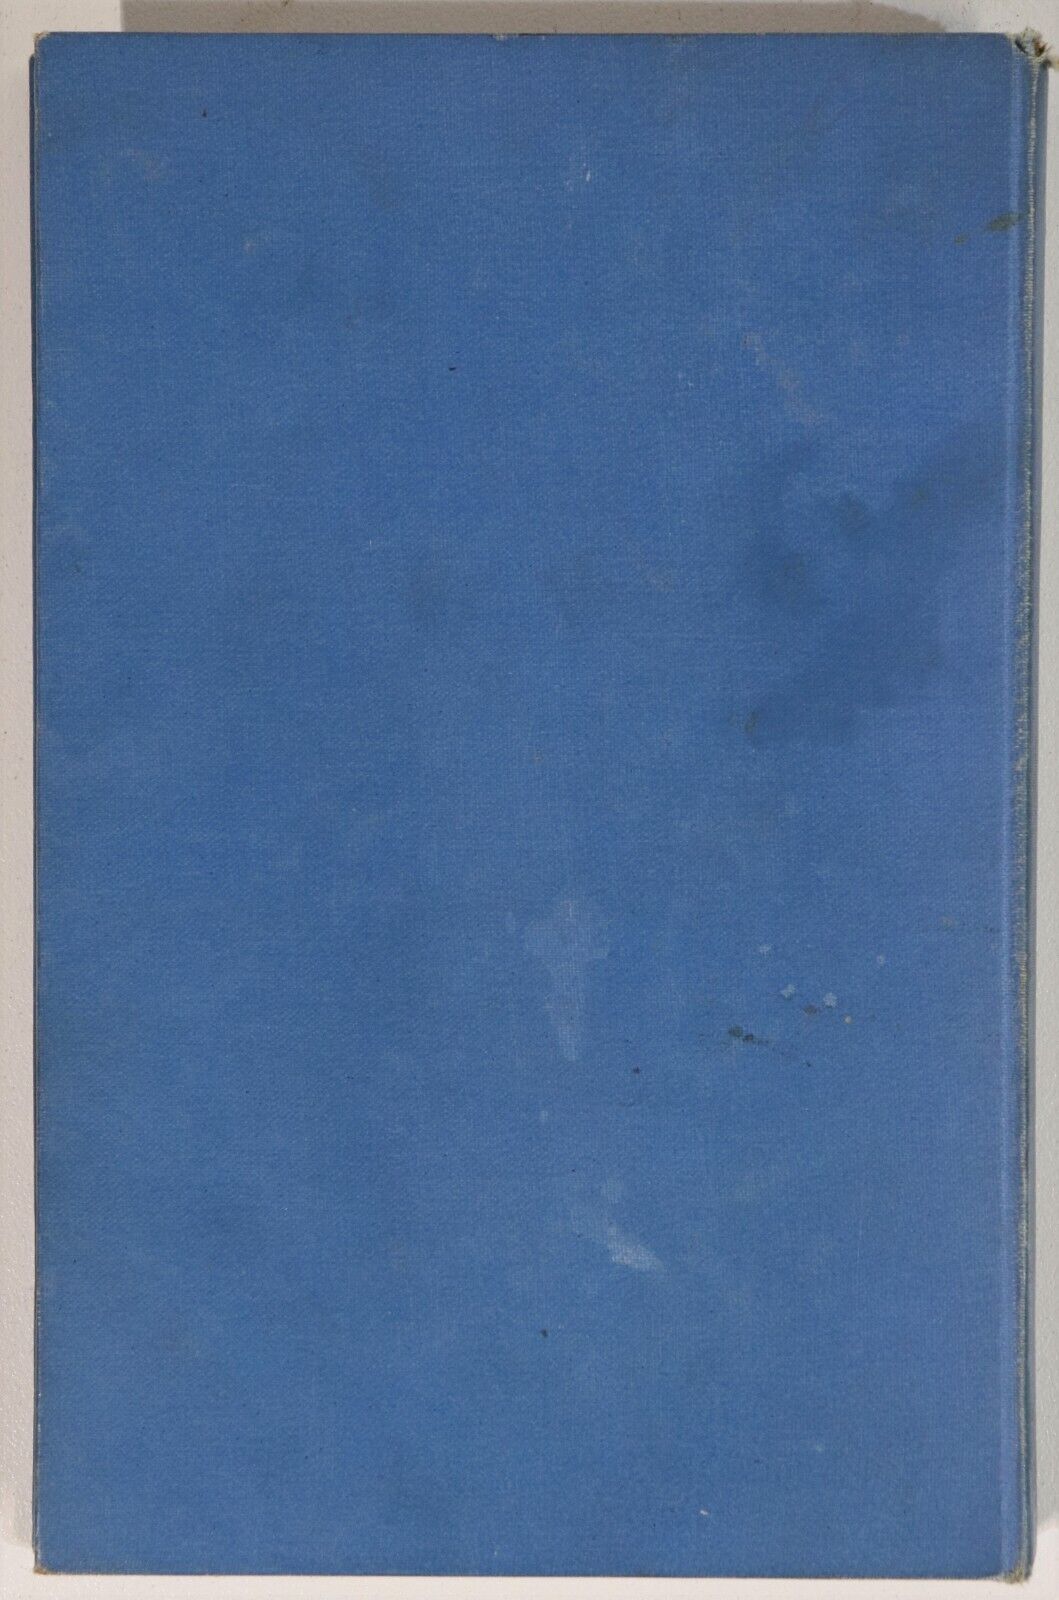 The Romance Of The "Edina" - 1935 - Antique Australian Maritime History Book